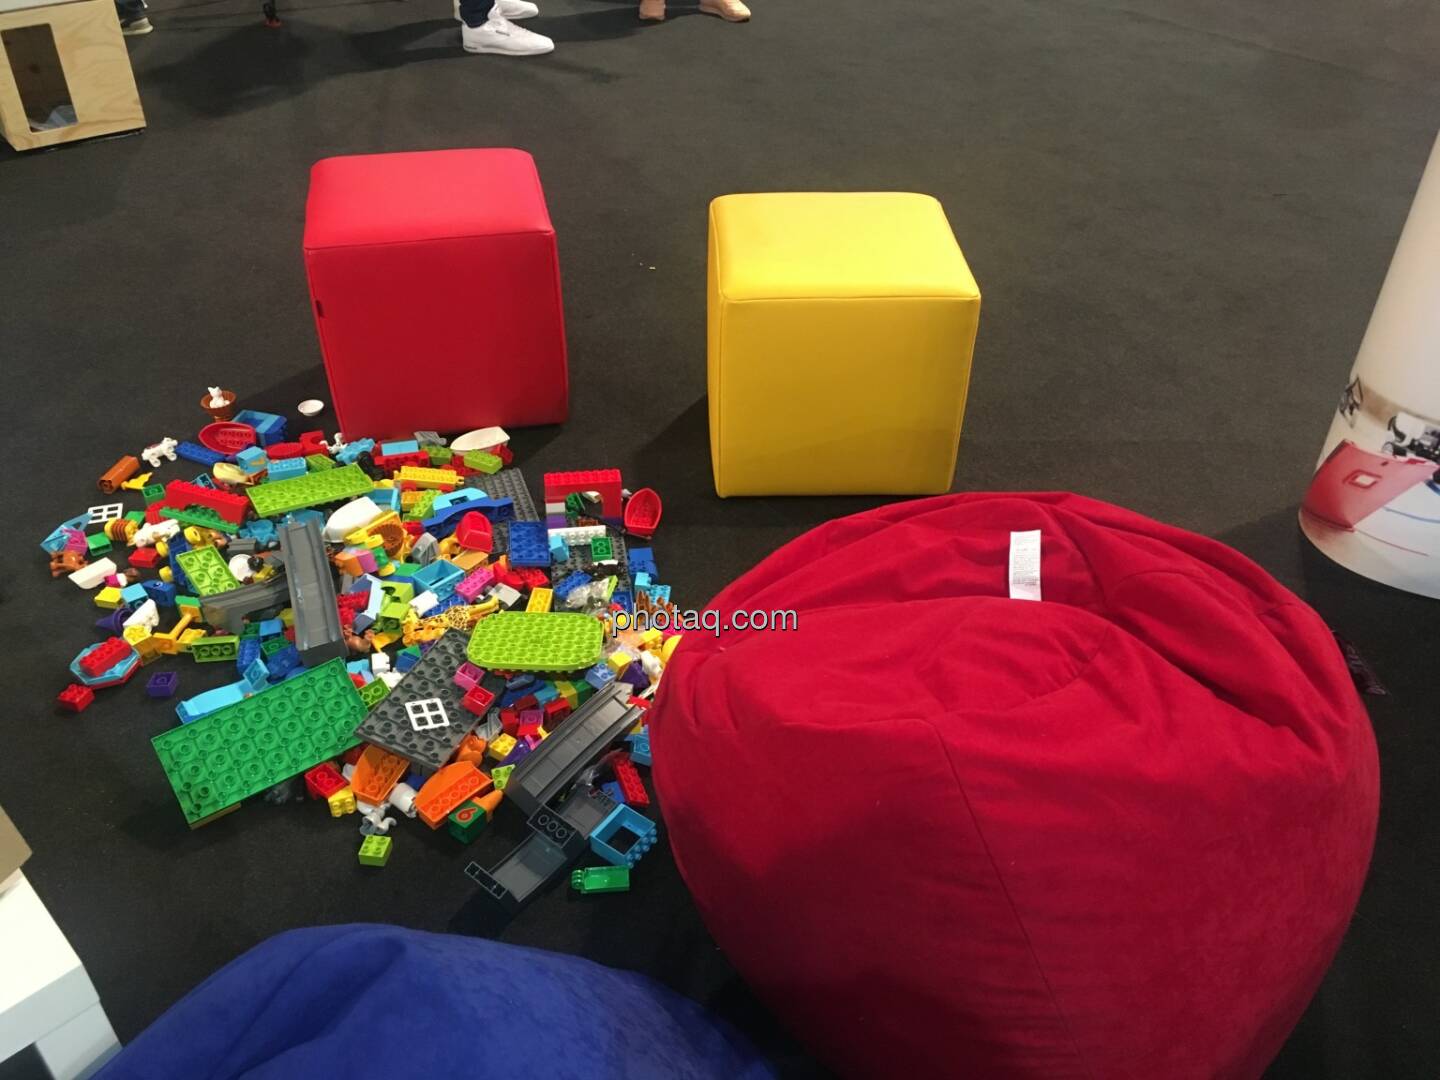 Eindrücke vom 4Gamechangers Festival, Lego, DavinciLab